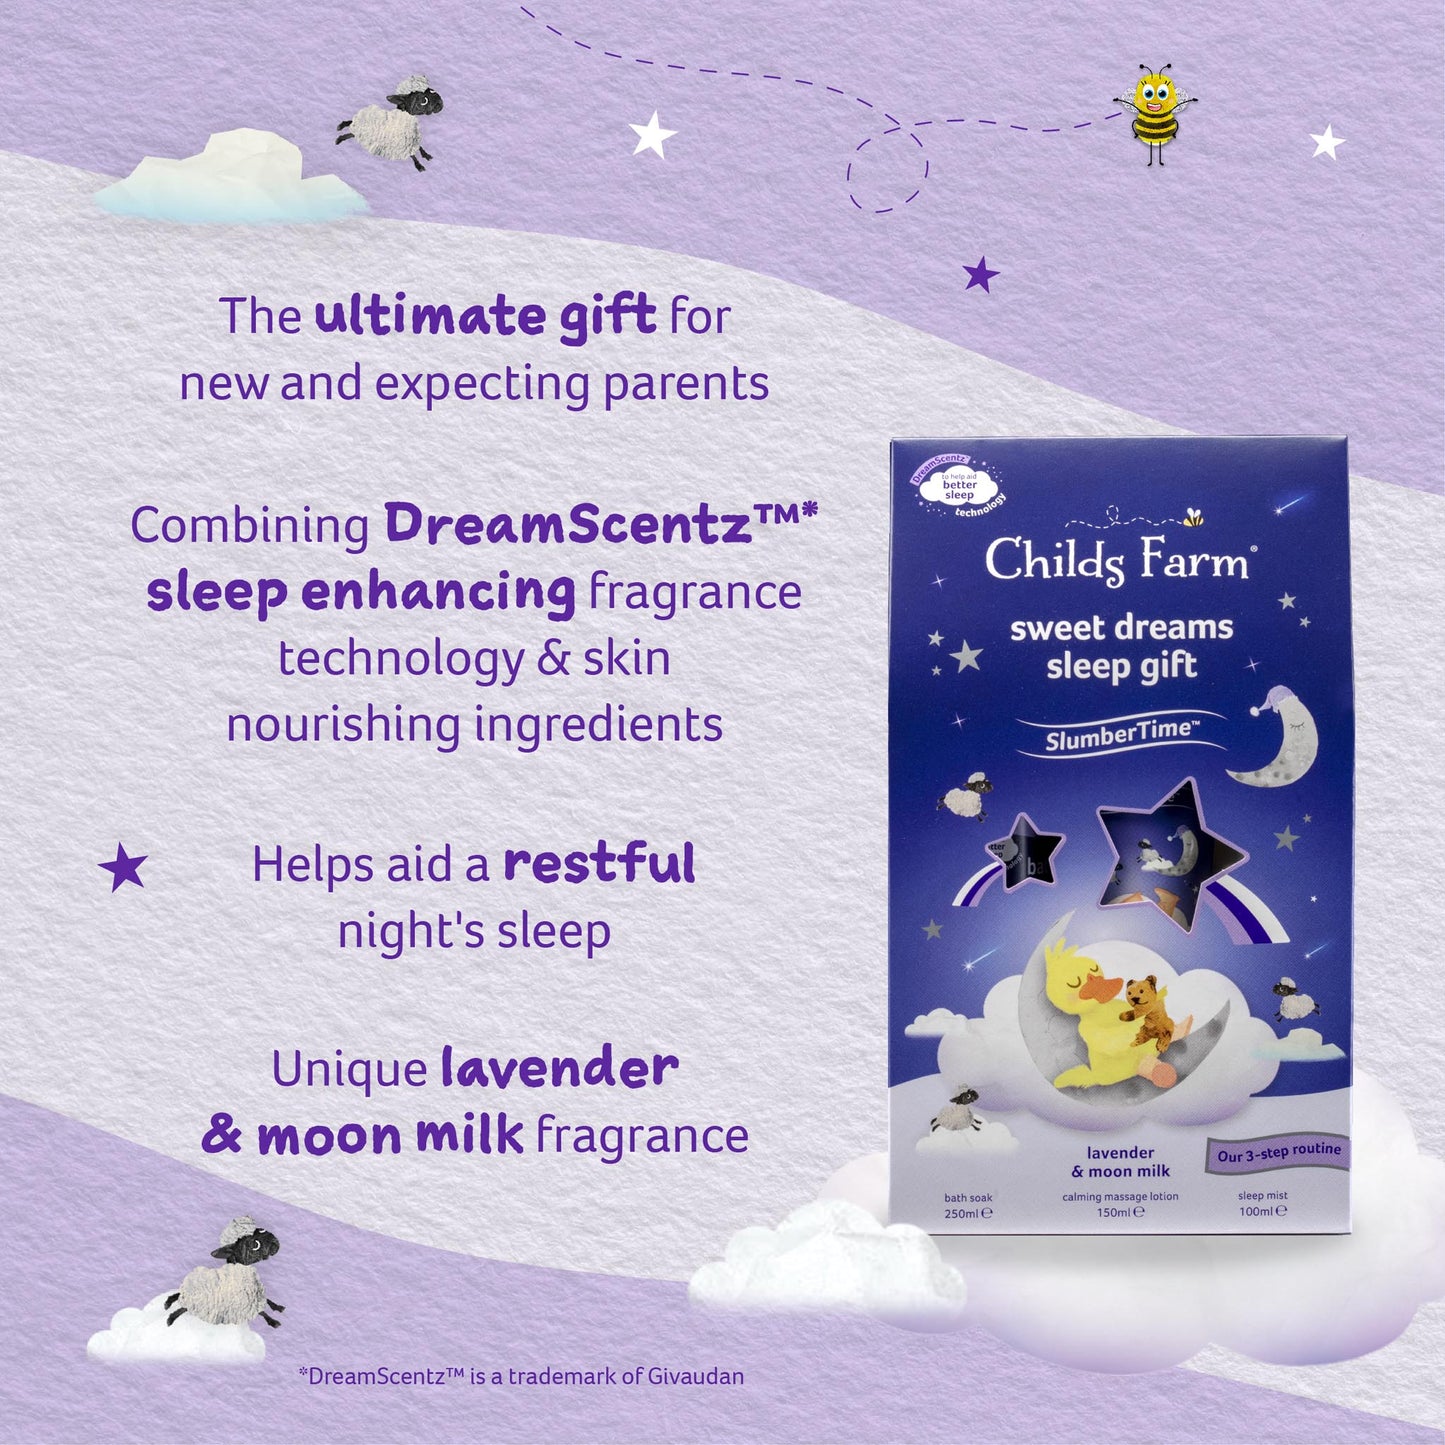 Childs Farm SlumberTime™ sweet dreams sleep gift lavender & moon milk